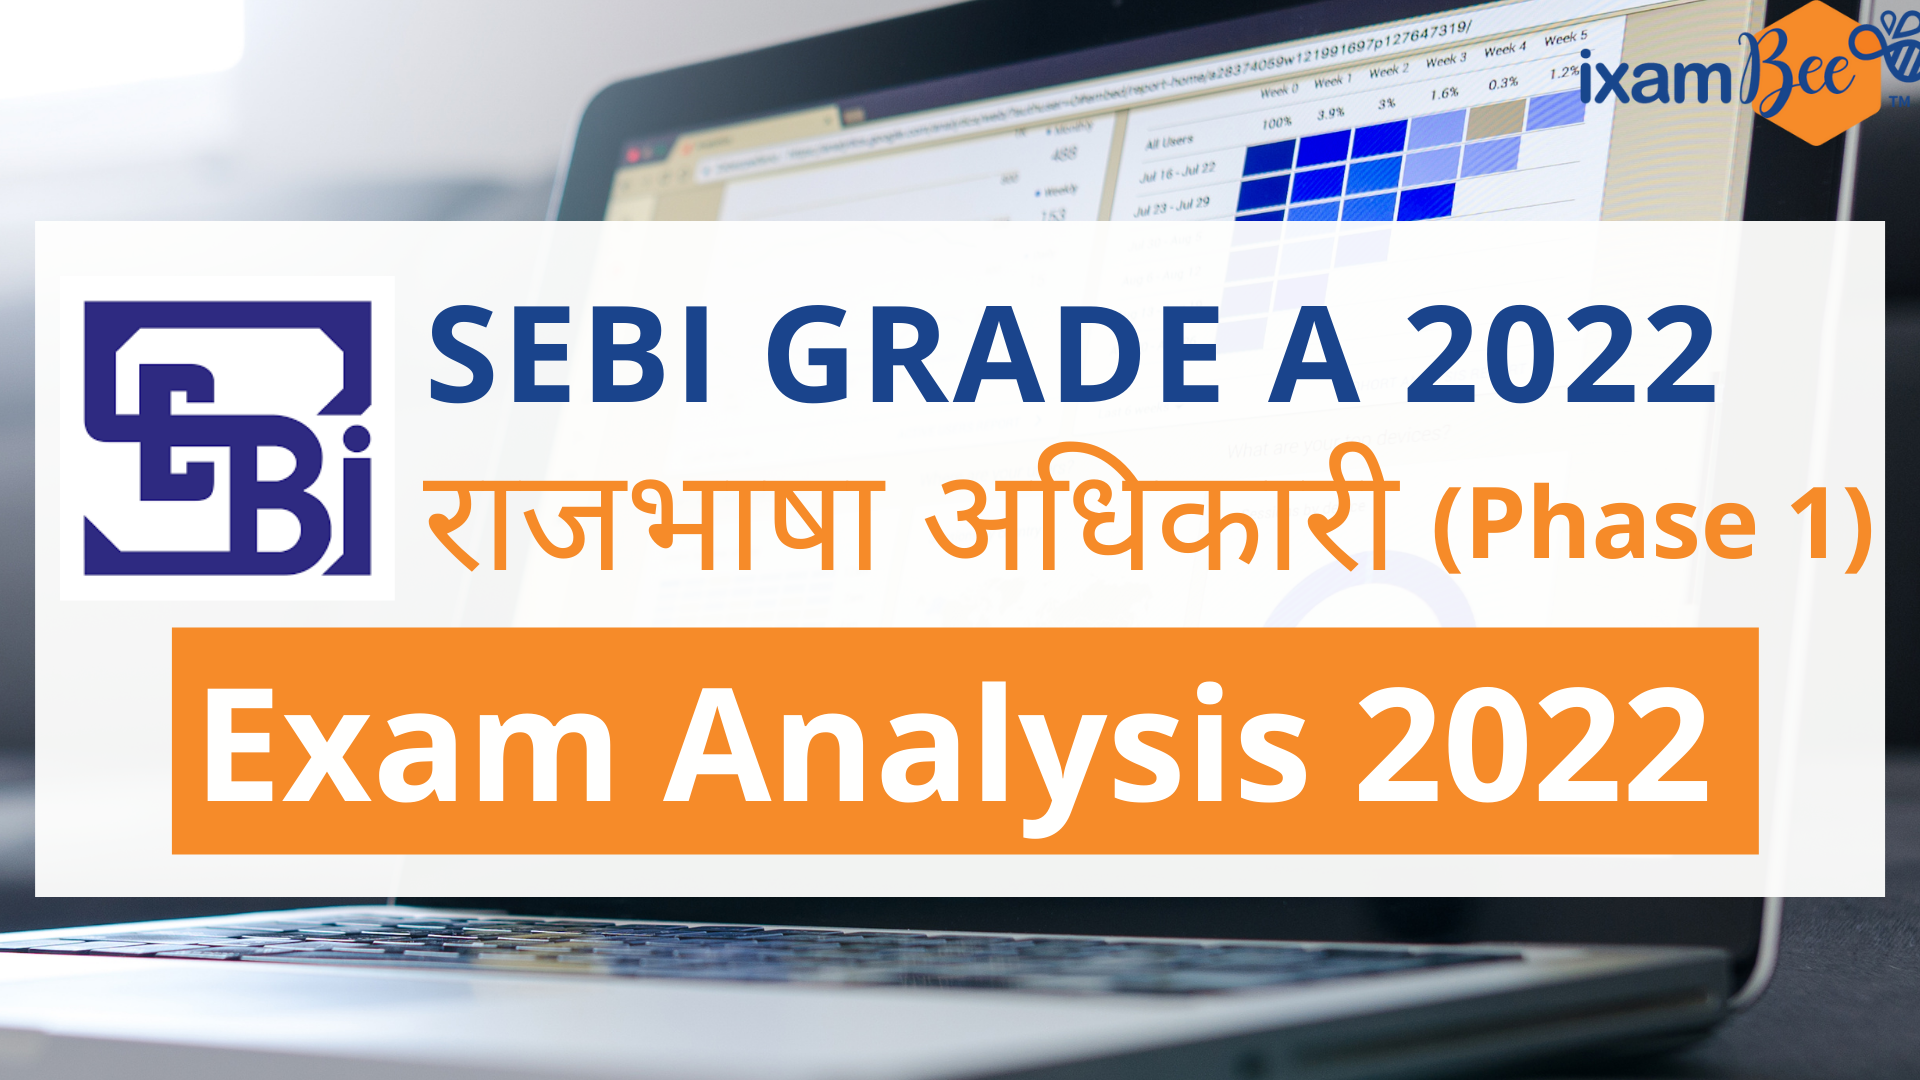 SEBI राजभाषा अधिकारी Phase 1 Exam Analysis 2022: SEBI Grade A Exam Analysis 2022